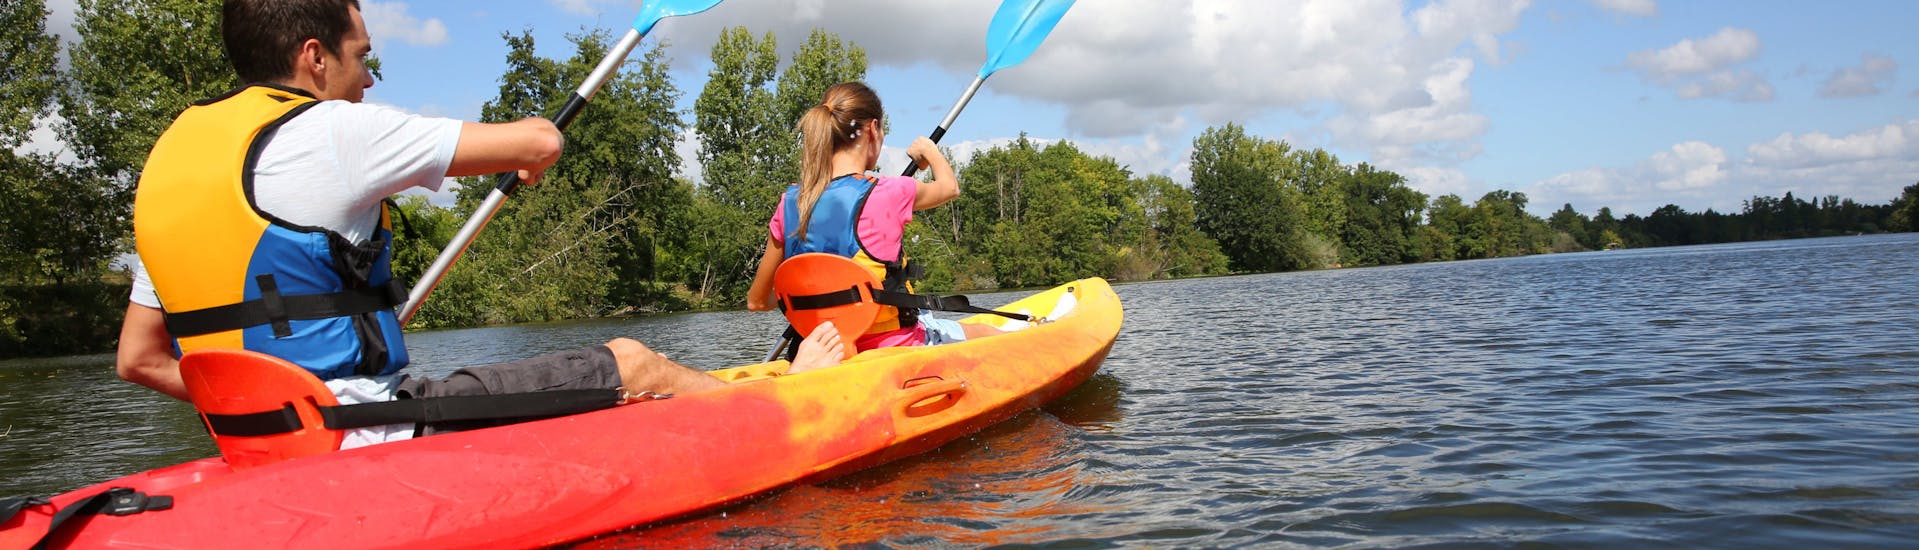 Anspruchsvolle Kayak & Kanu-Tour in Chalonnes-sur-Loire - Loire River.